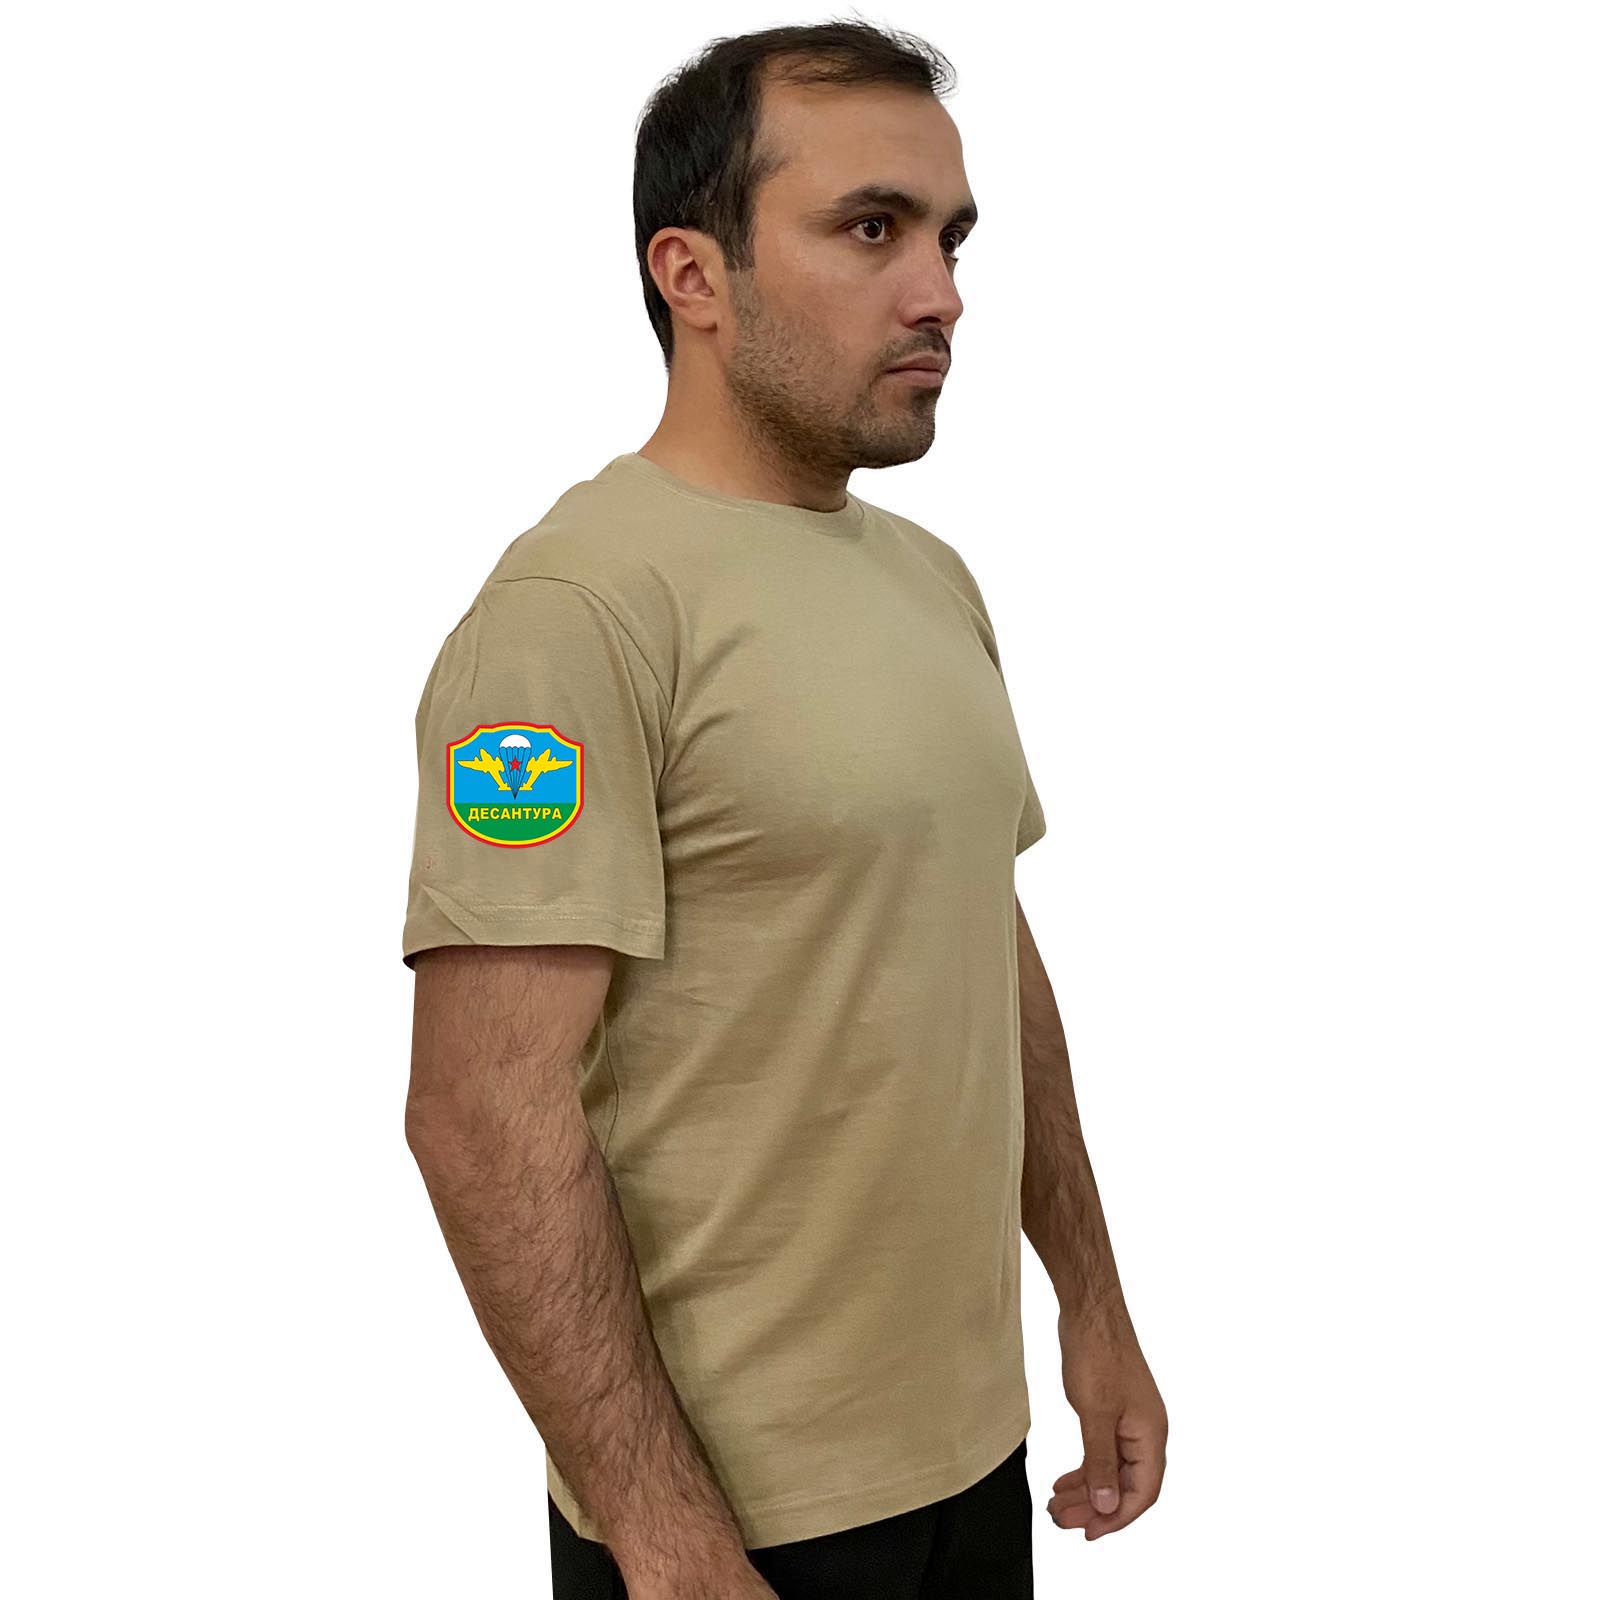 Песочная футболка с термотрансфером "Десантура" на рукаве